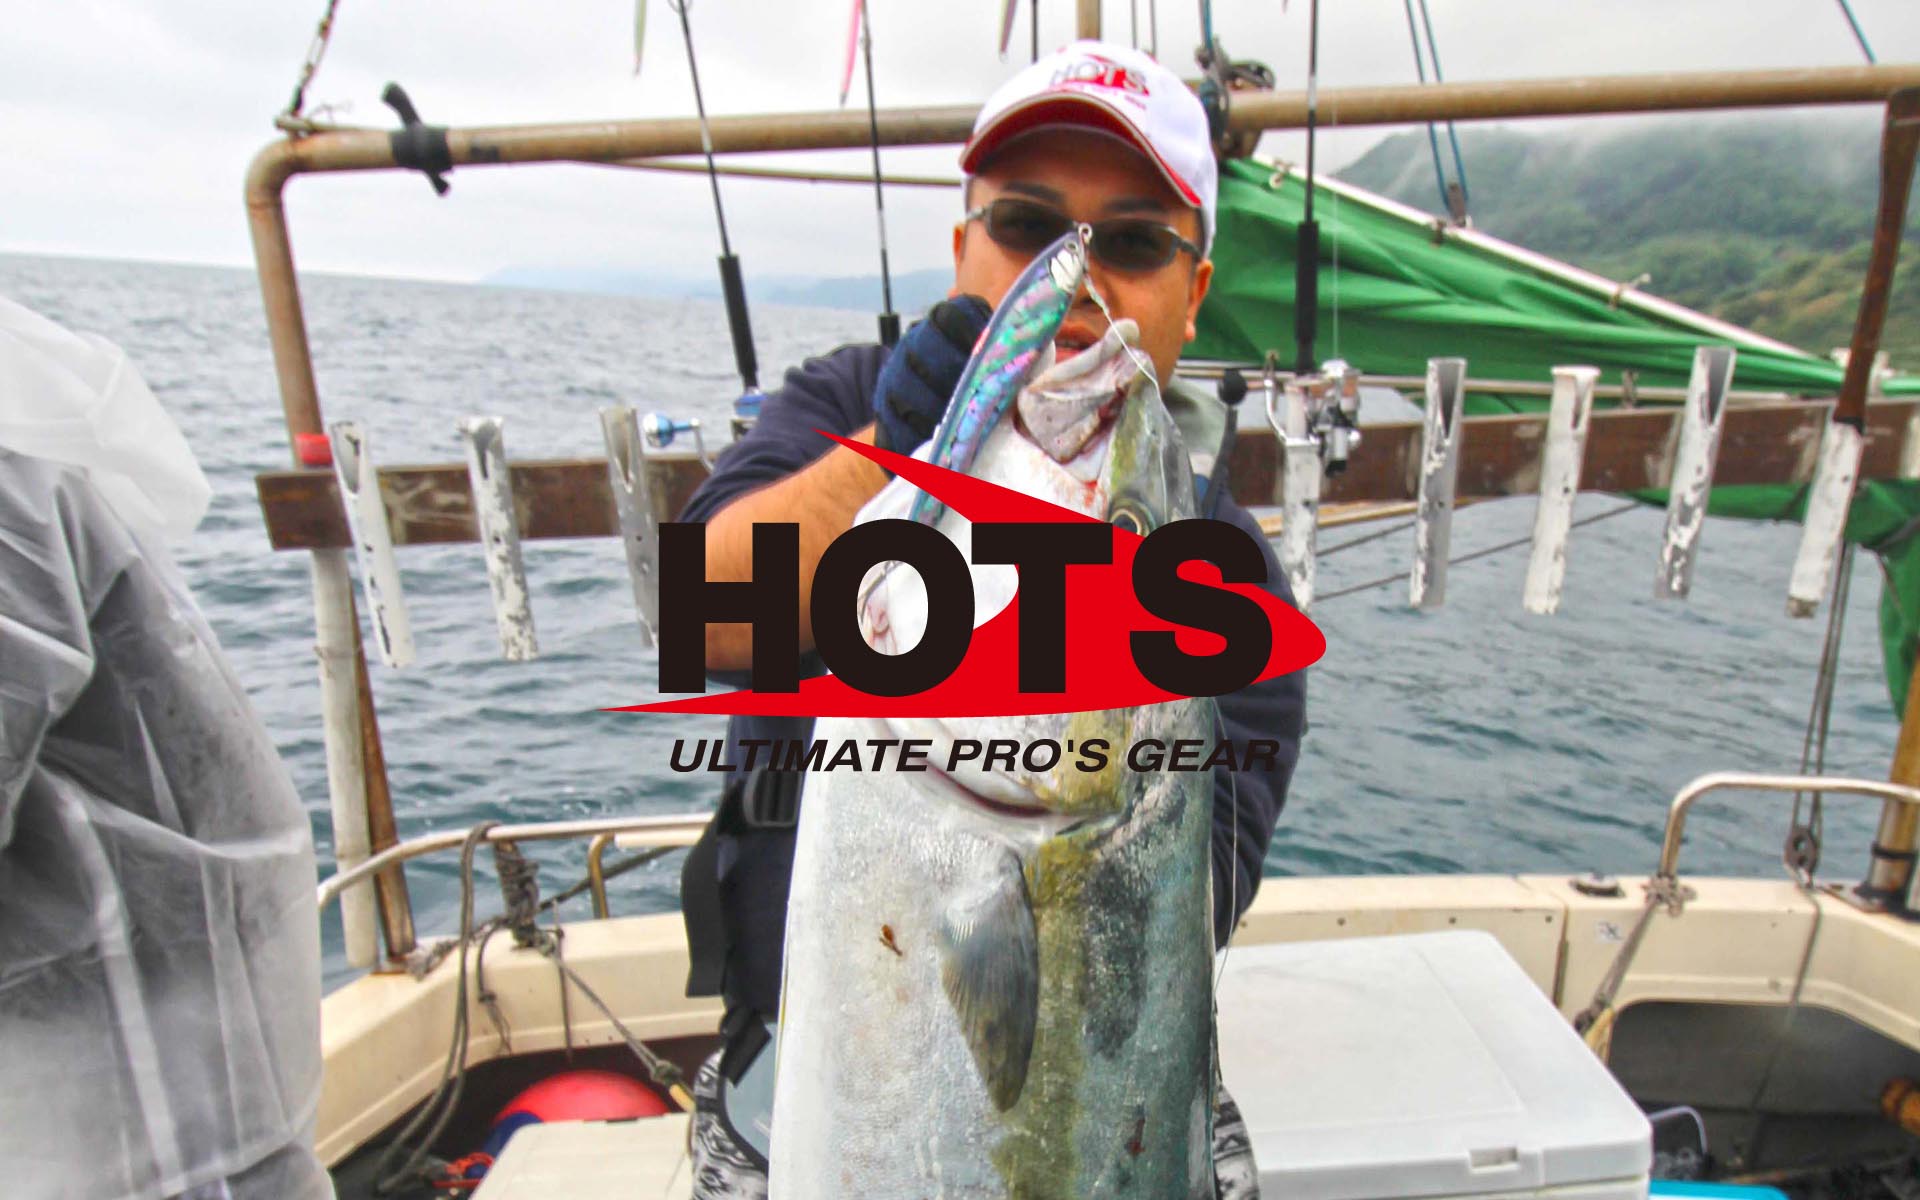 HOT'S ホッツ -ULTIMATE PRO'S GEAR- ジギング釣具用品